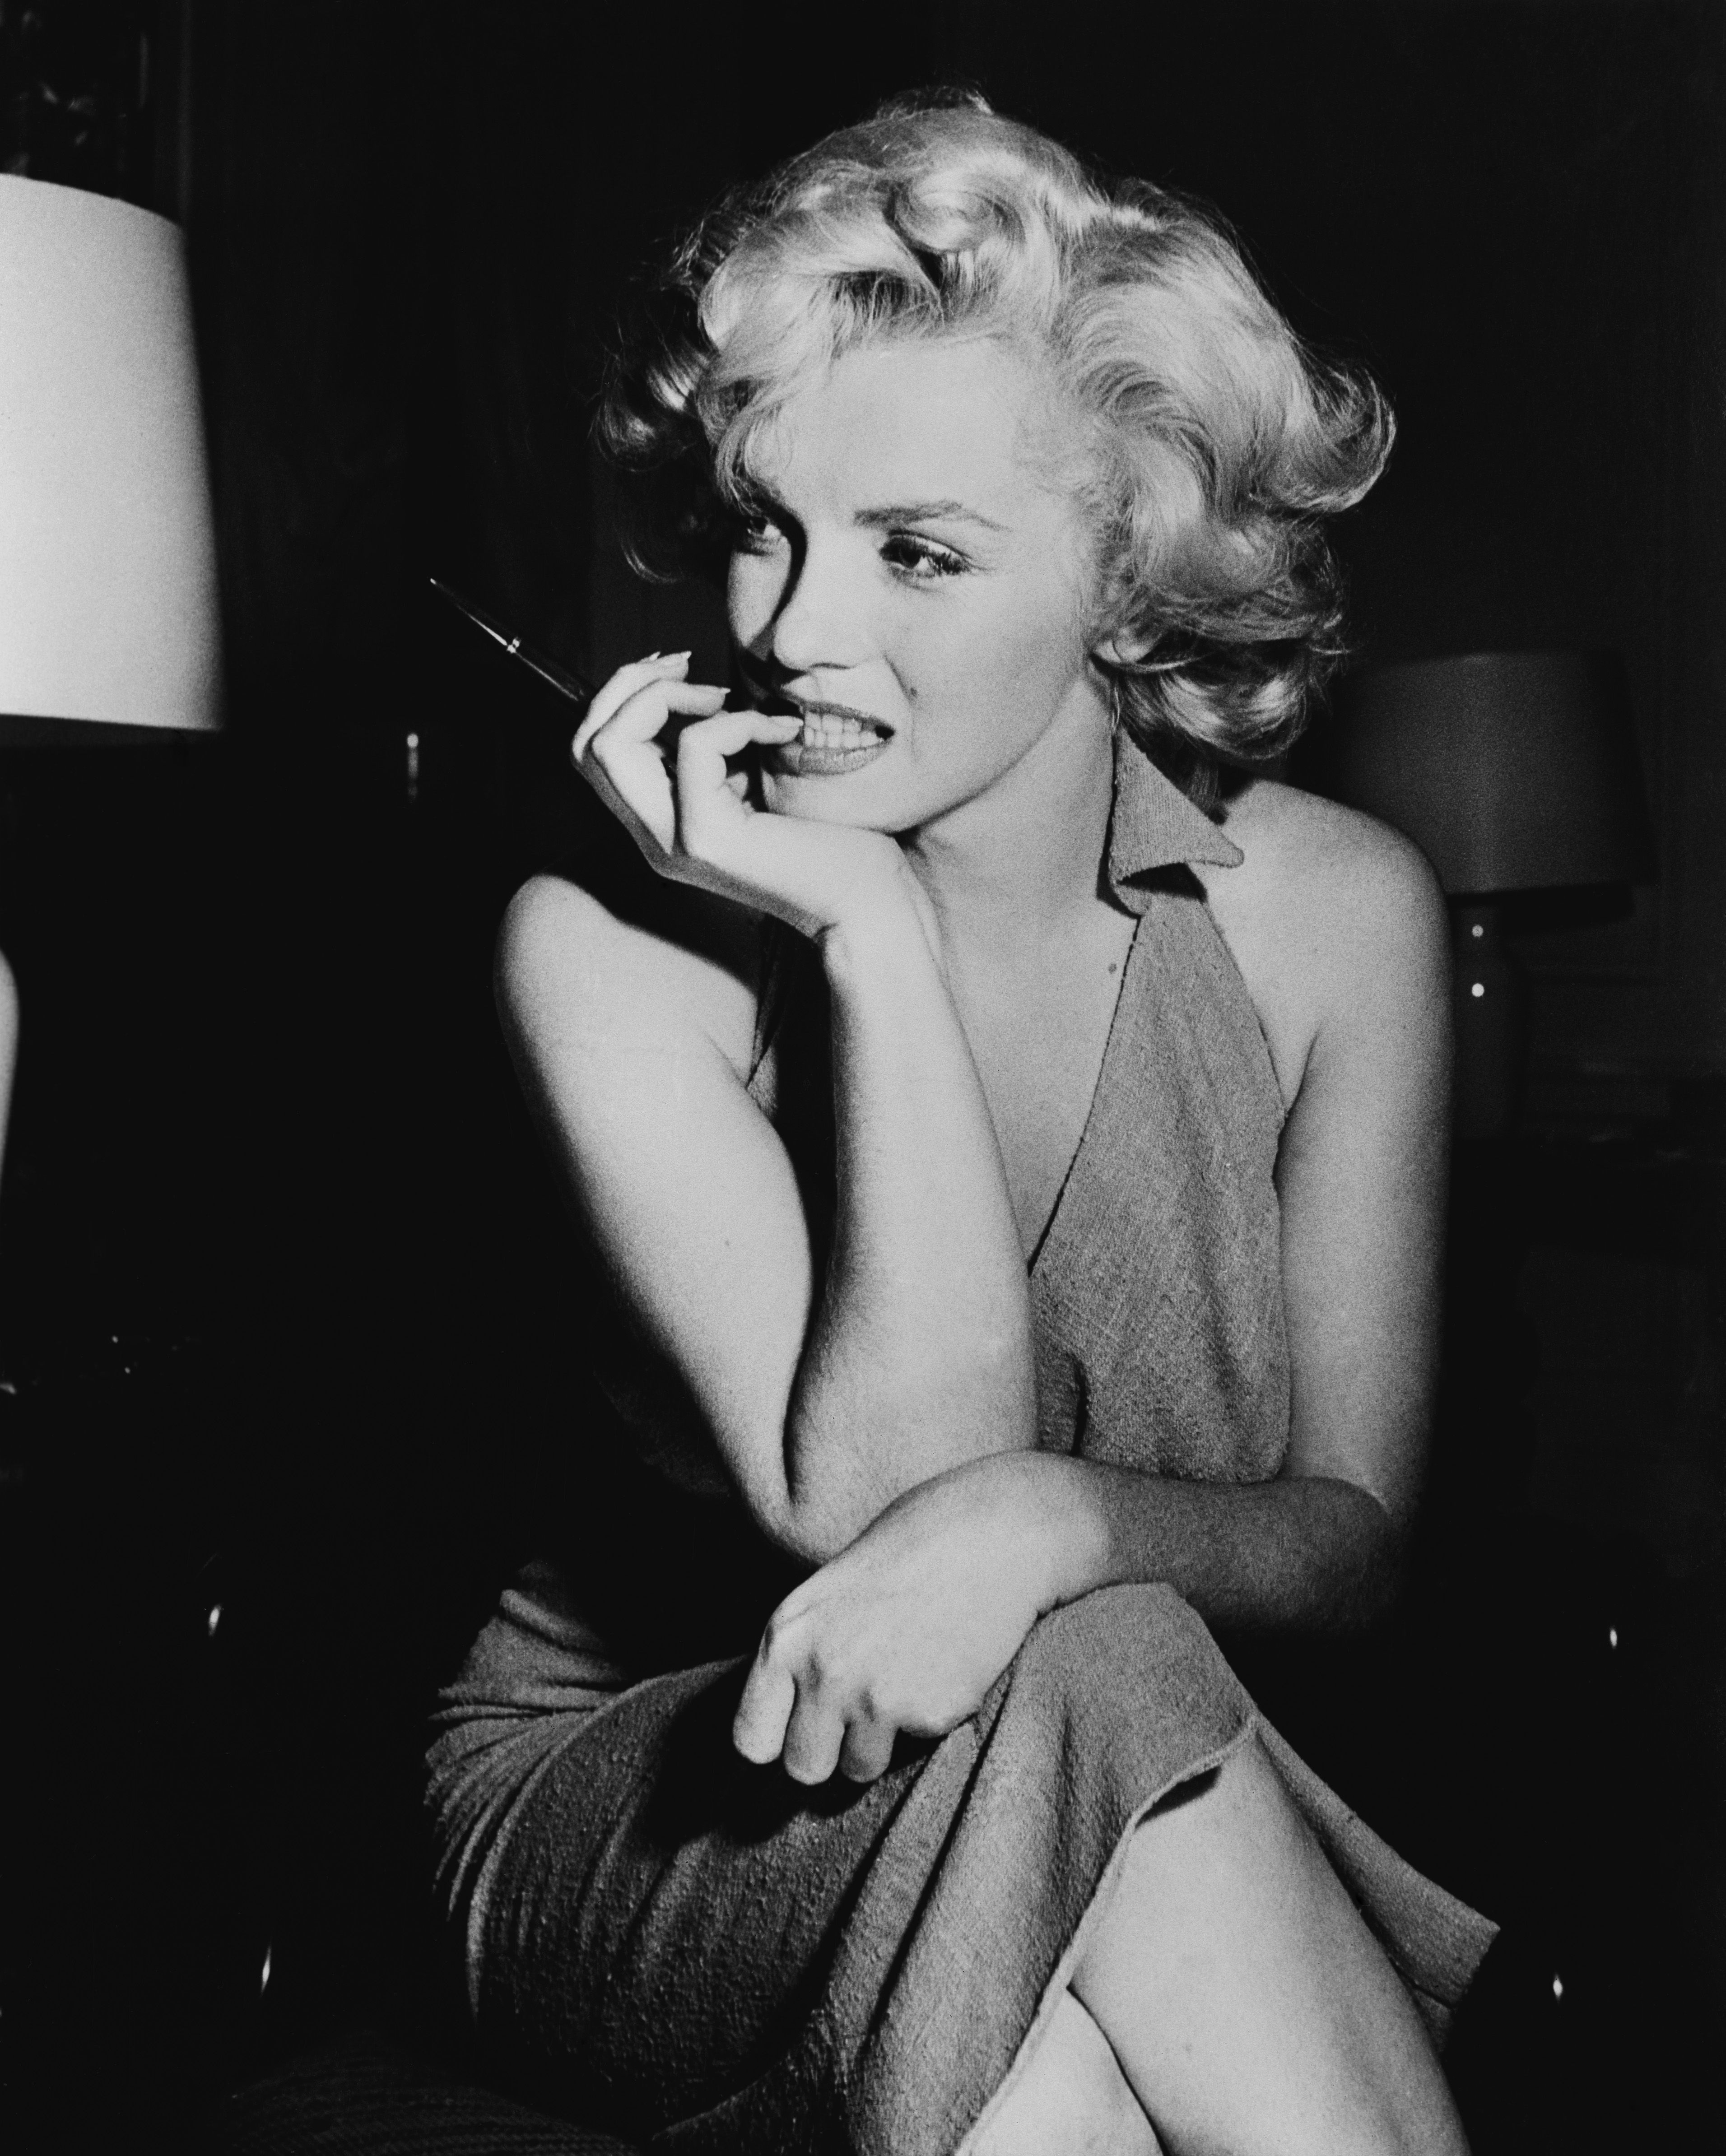 The explosive real story behind Marilyn Monroe film Blonde photo